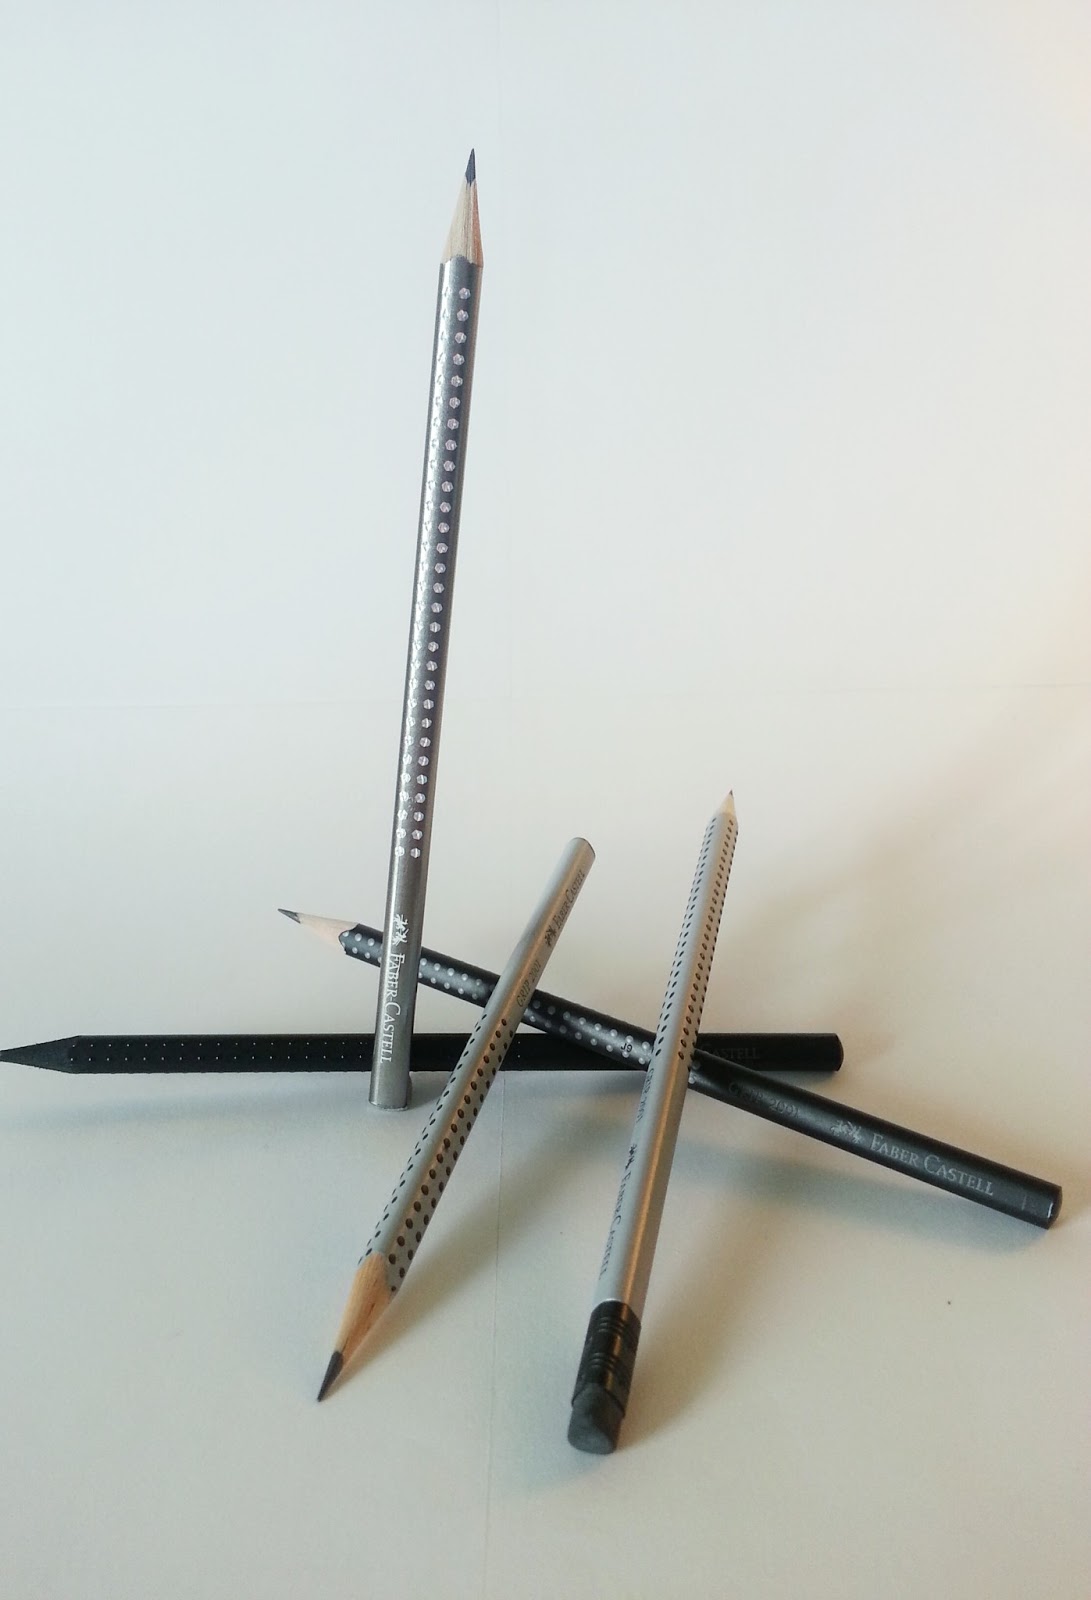 Faber-Castell Jumbo Grip Graphite Pencil